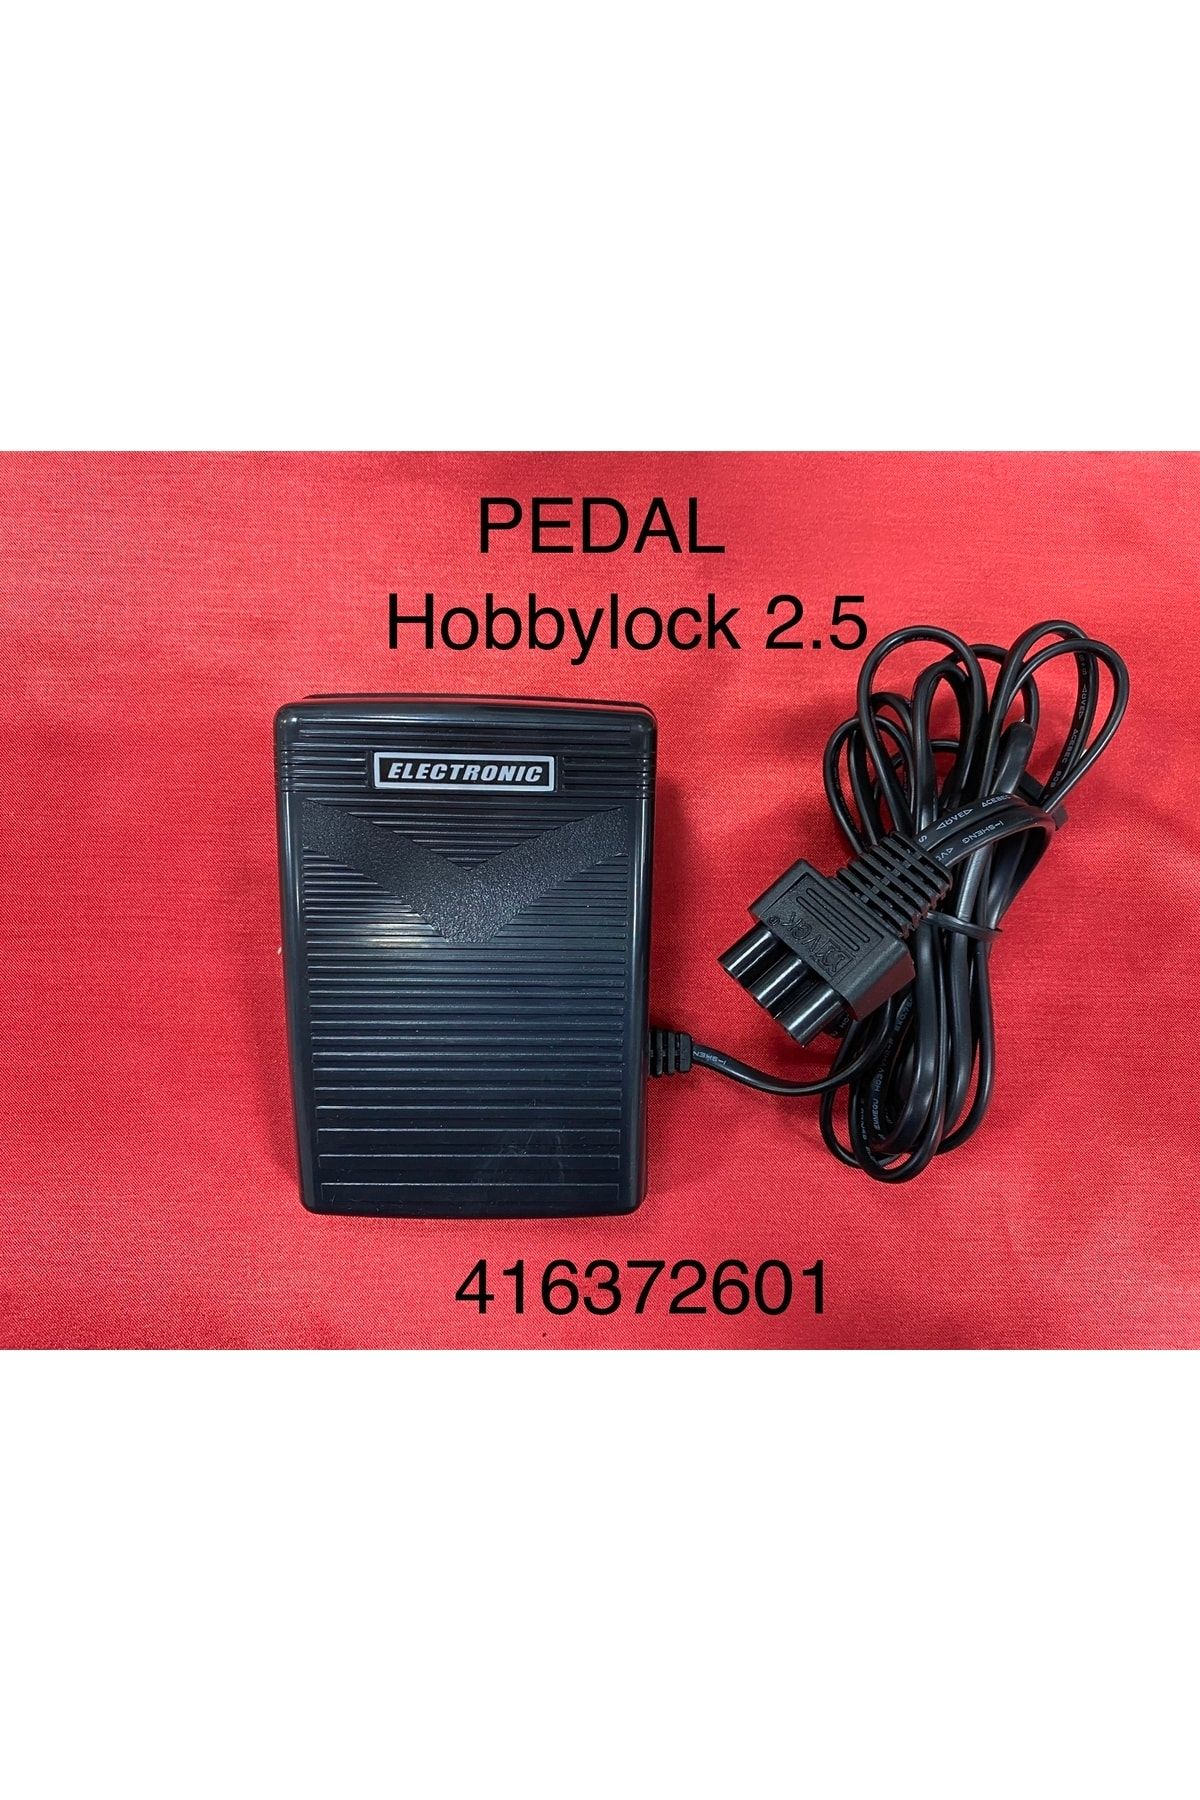 Pfaff Pedal Hobbylock 2.5--coverlock 3.0 -416372601-